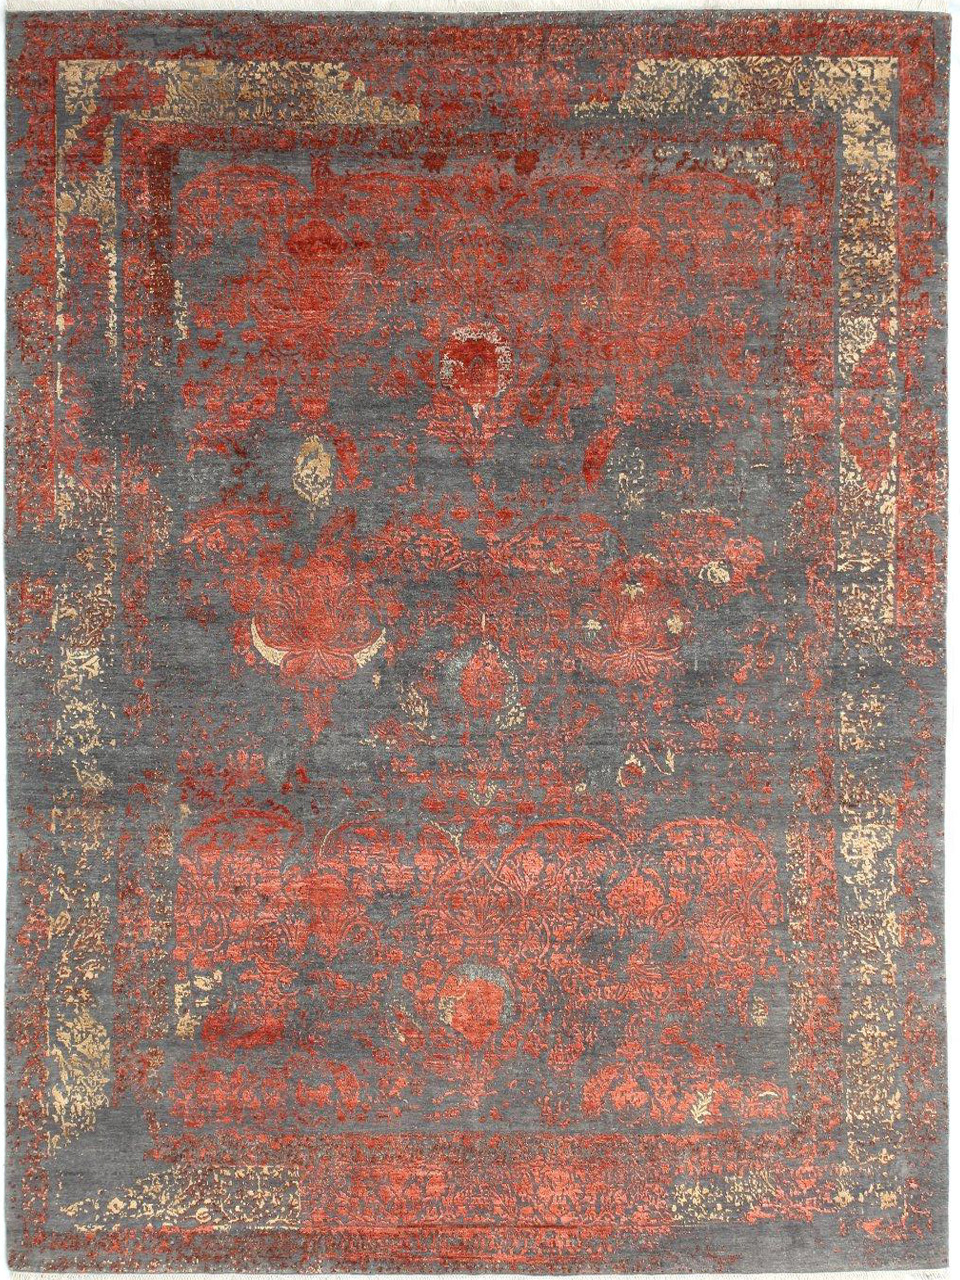 Cloak - Ava grey-red rug